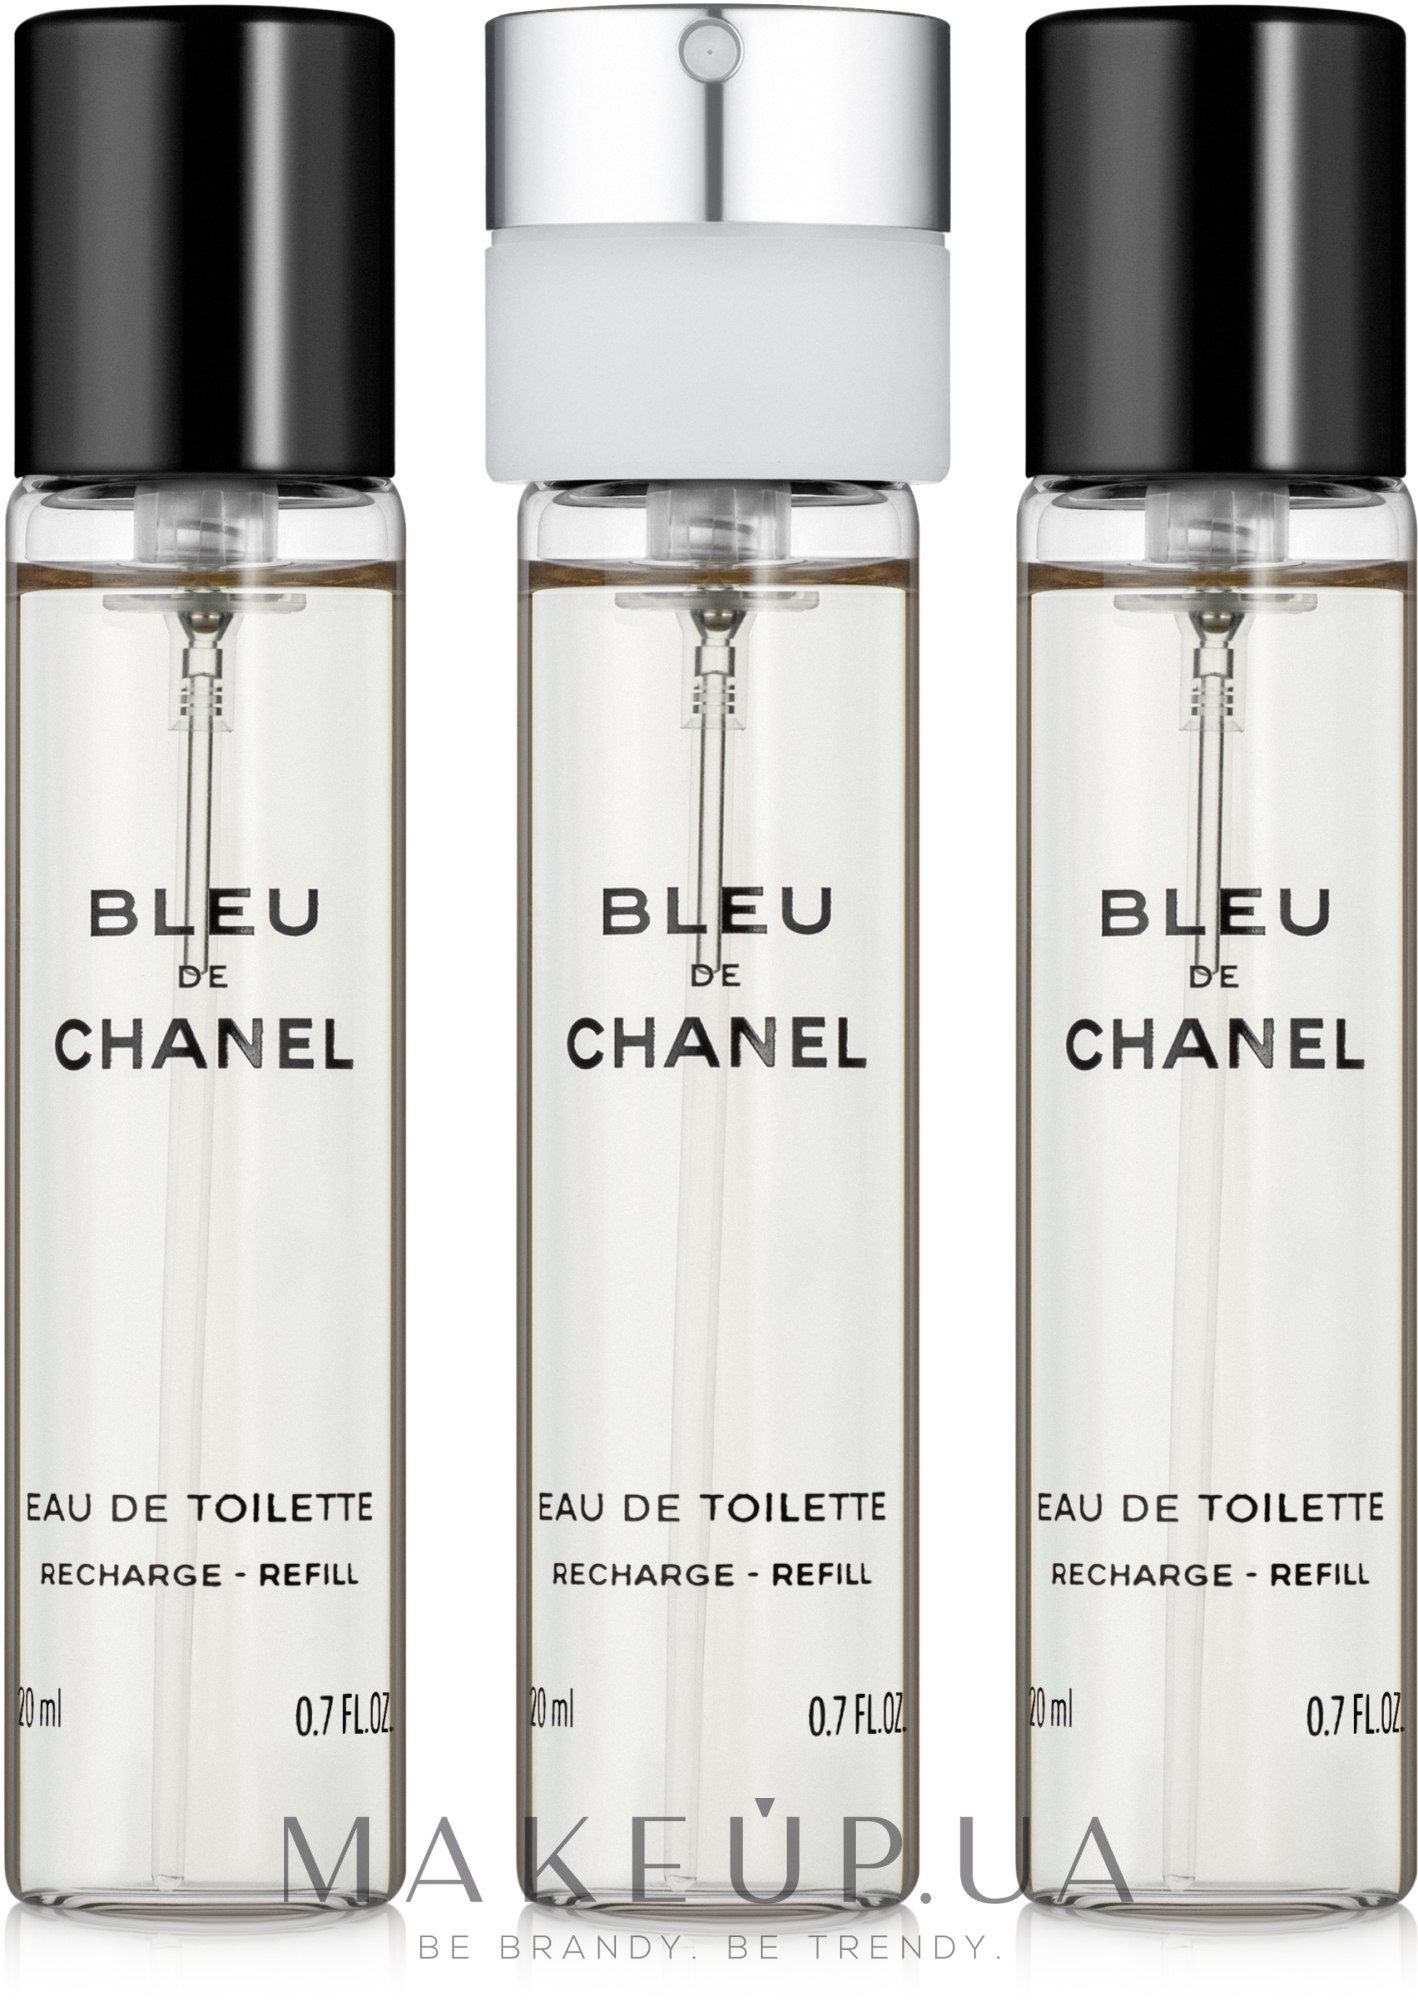 Chanel Bleu de Chanel - Туалетная вода (сменный блок) — фото 3x20ml